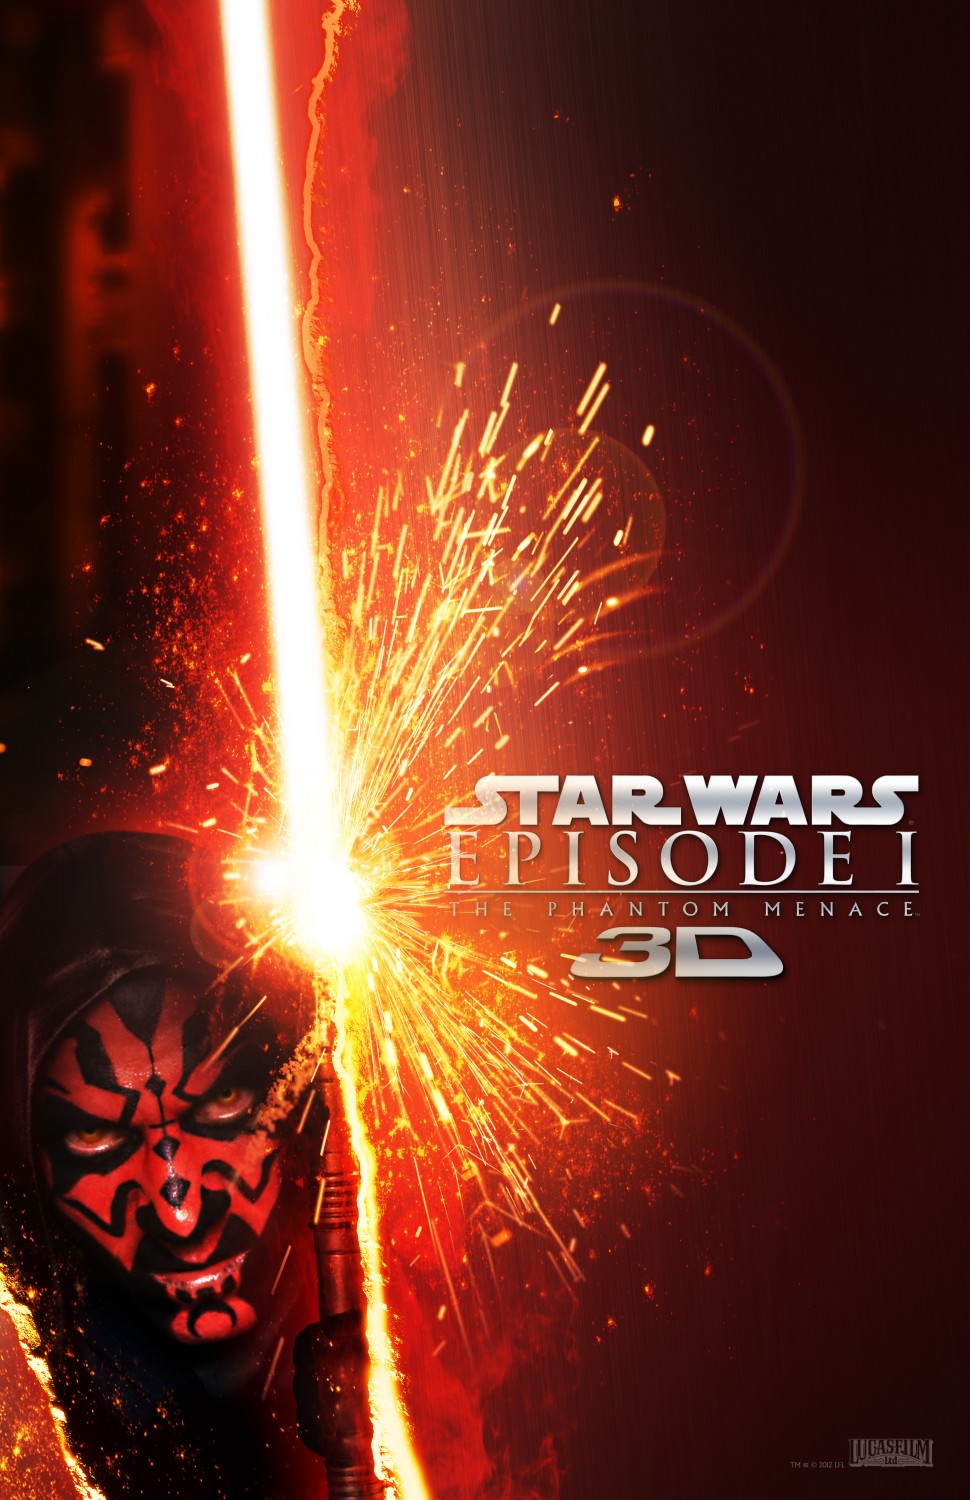 Star-Wars-Episode1-Poster-007.jpg